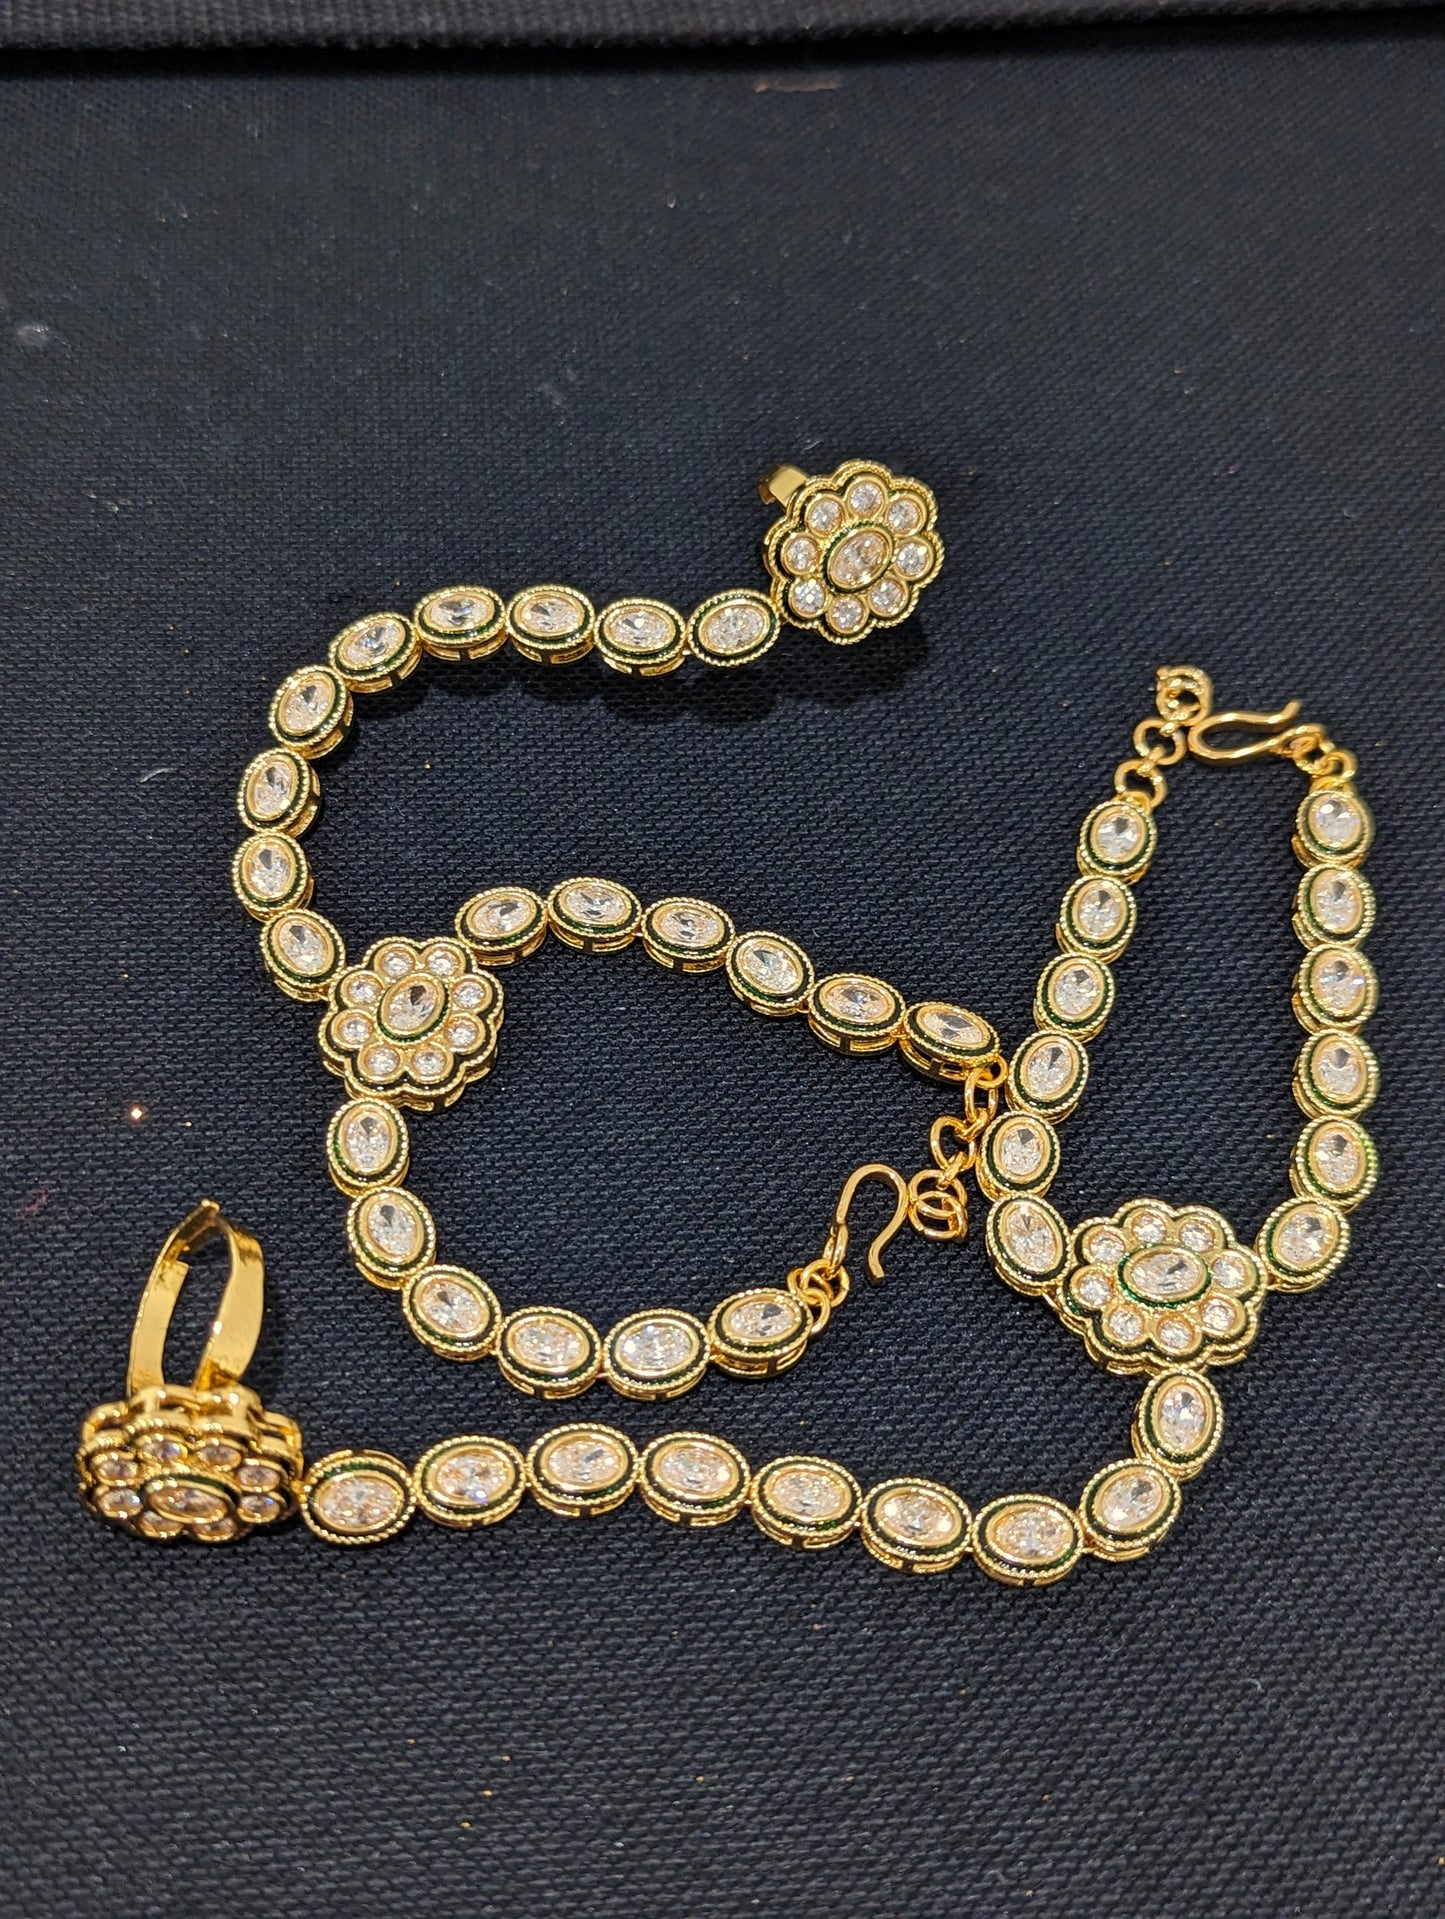 Polki Haath Phool / Bracelet Ring Combo / Ring Chain Bracelet / Indian Wedding Jewelry - D4